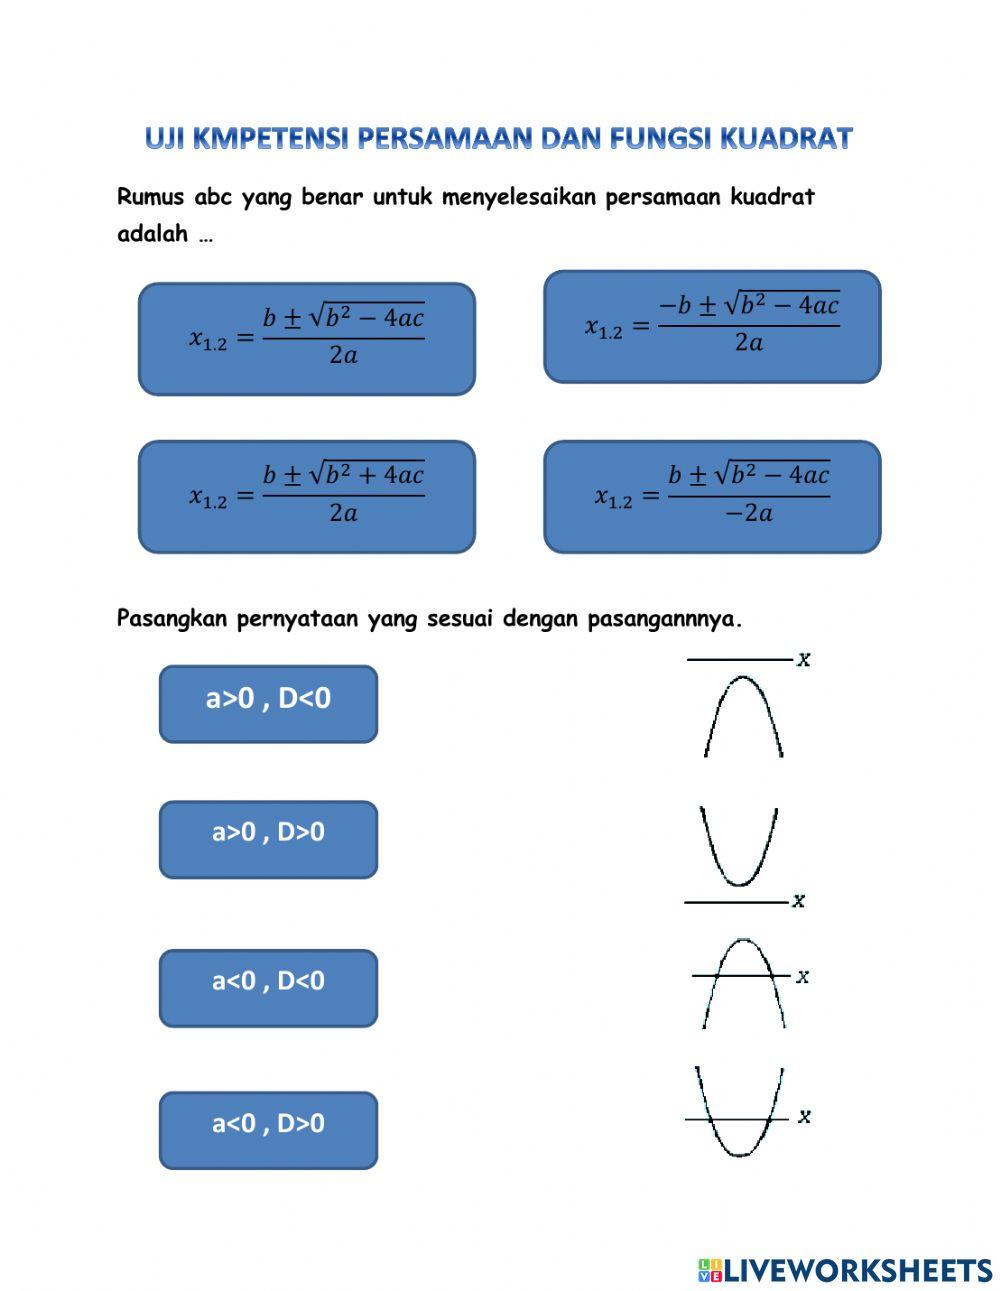 Persamaan dan fungsi kuadrat